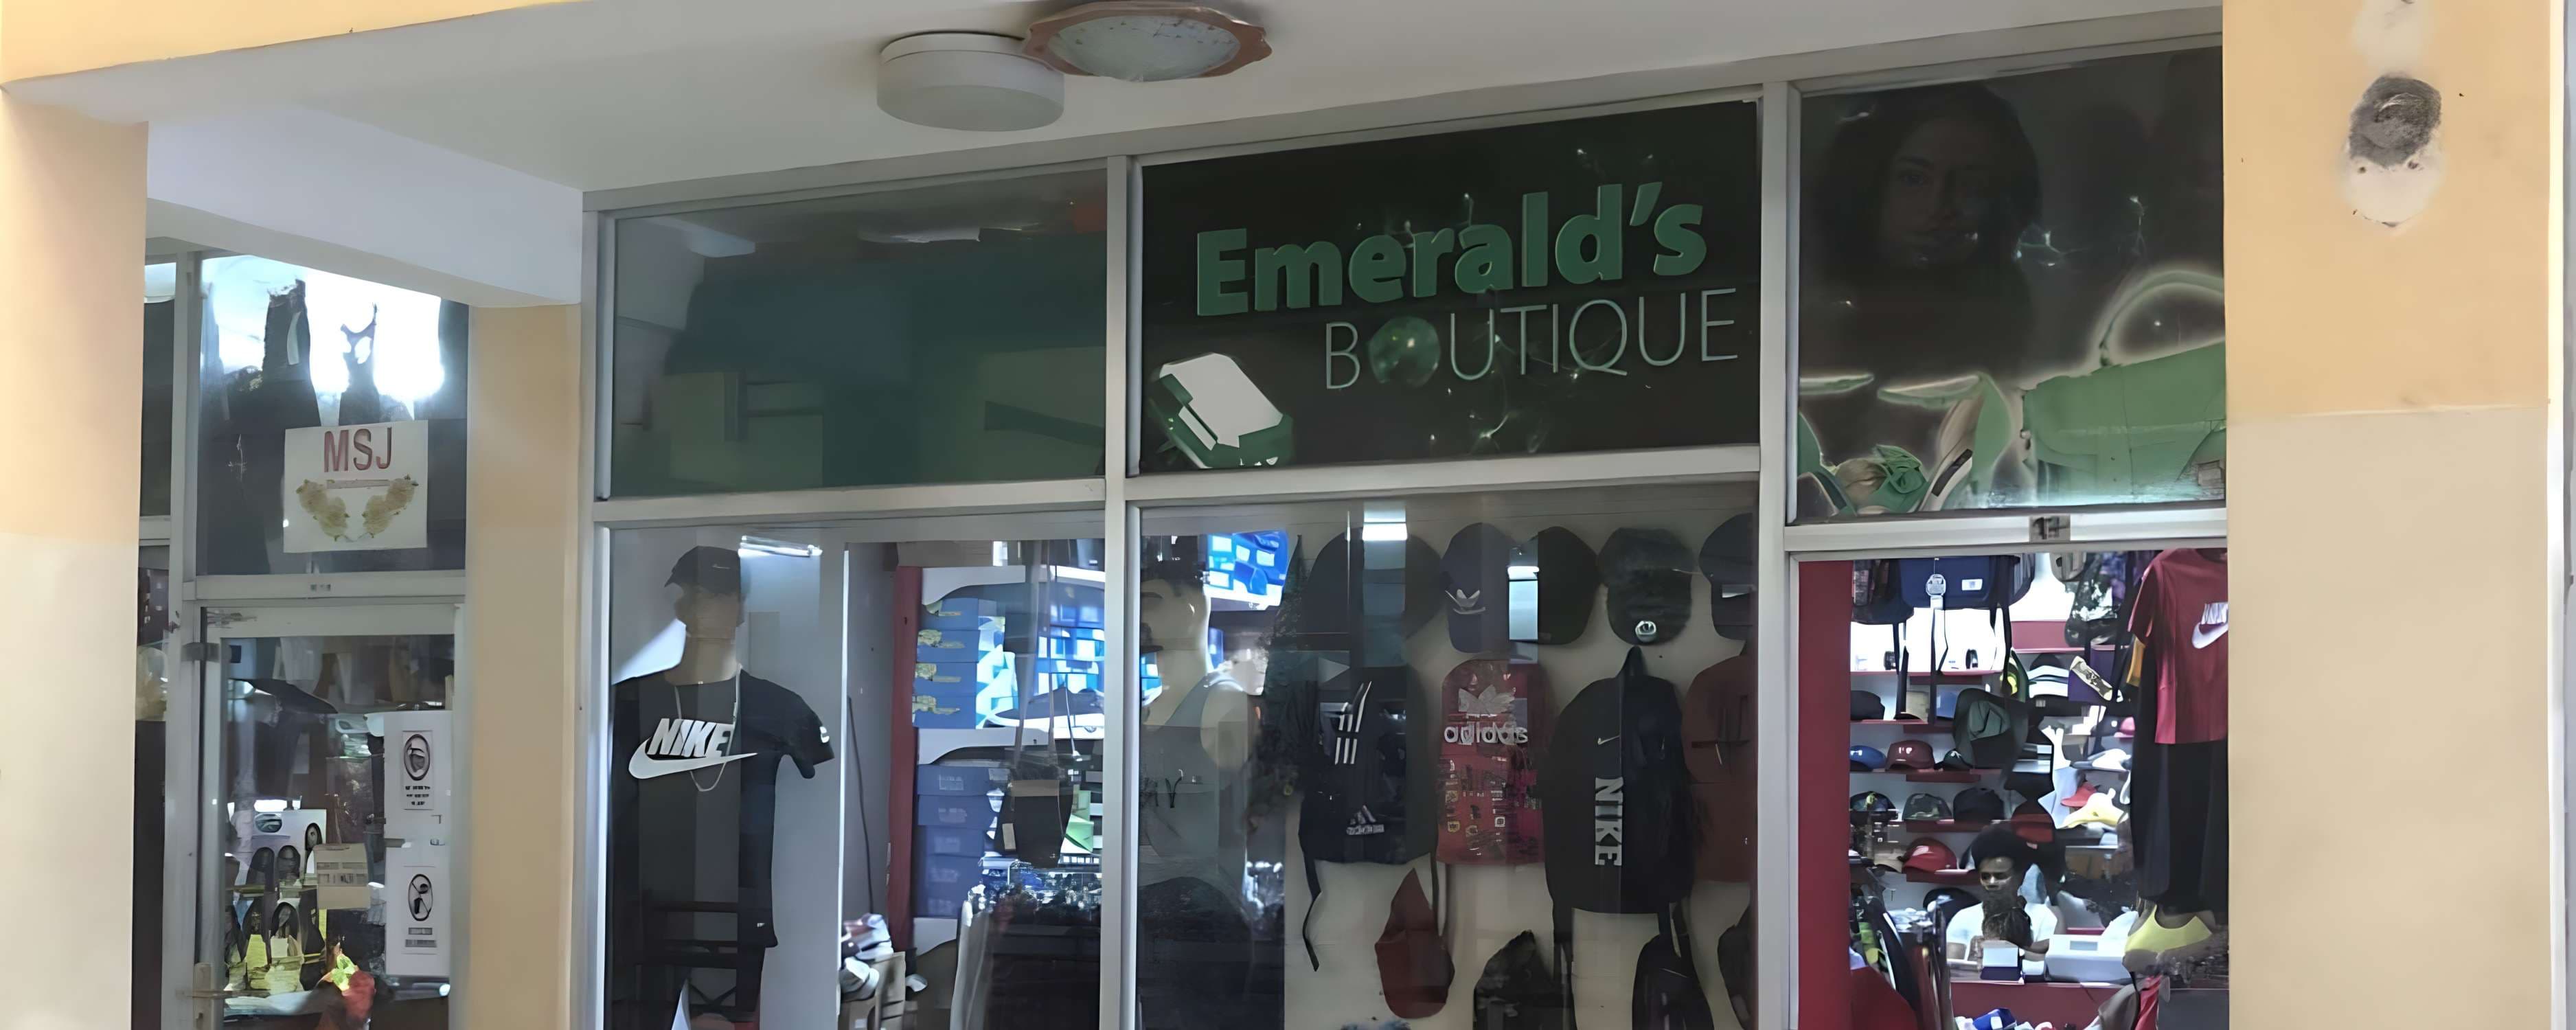 Emerald's Boutique